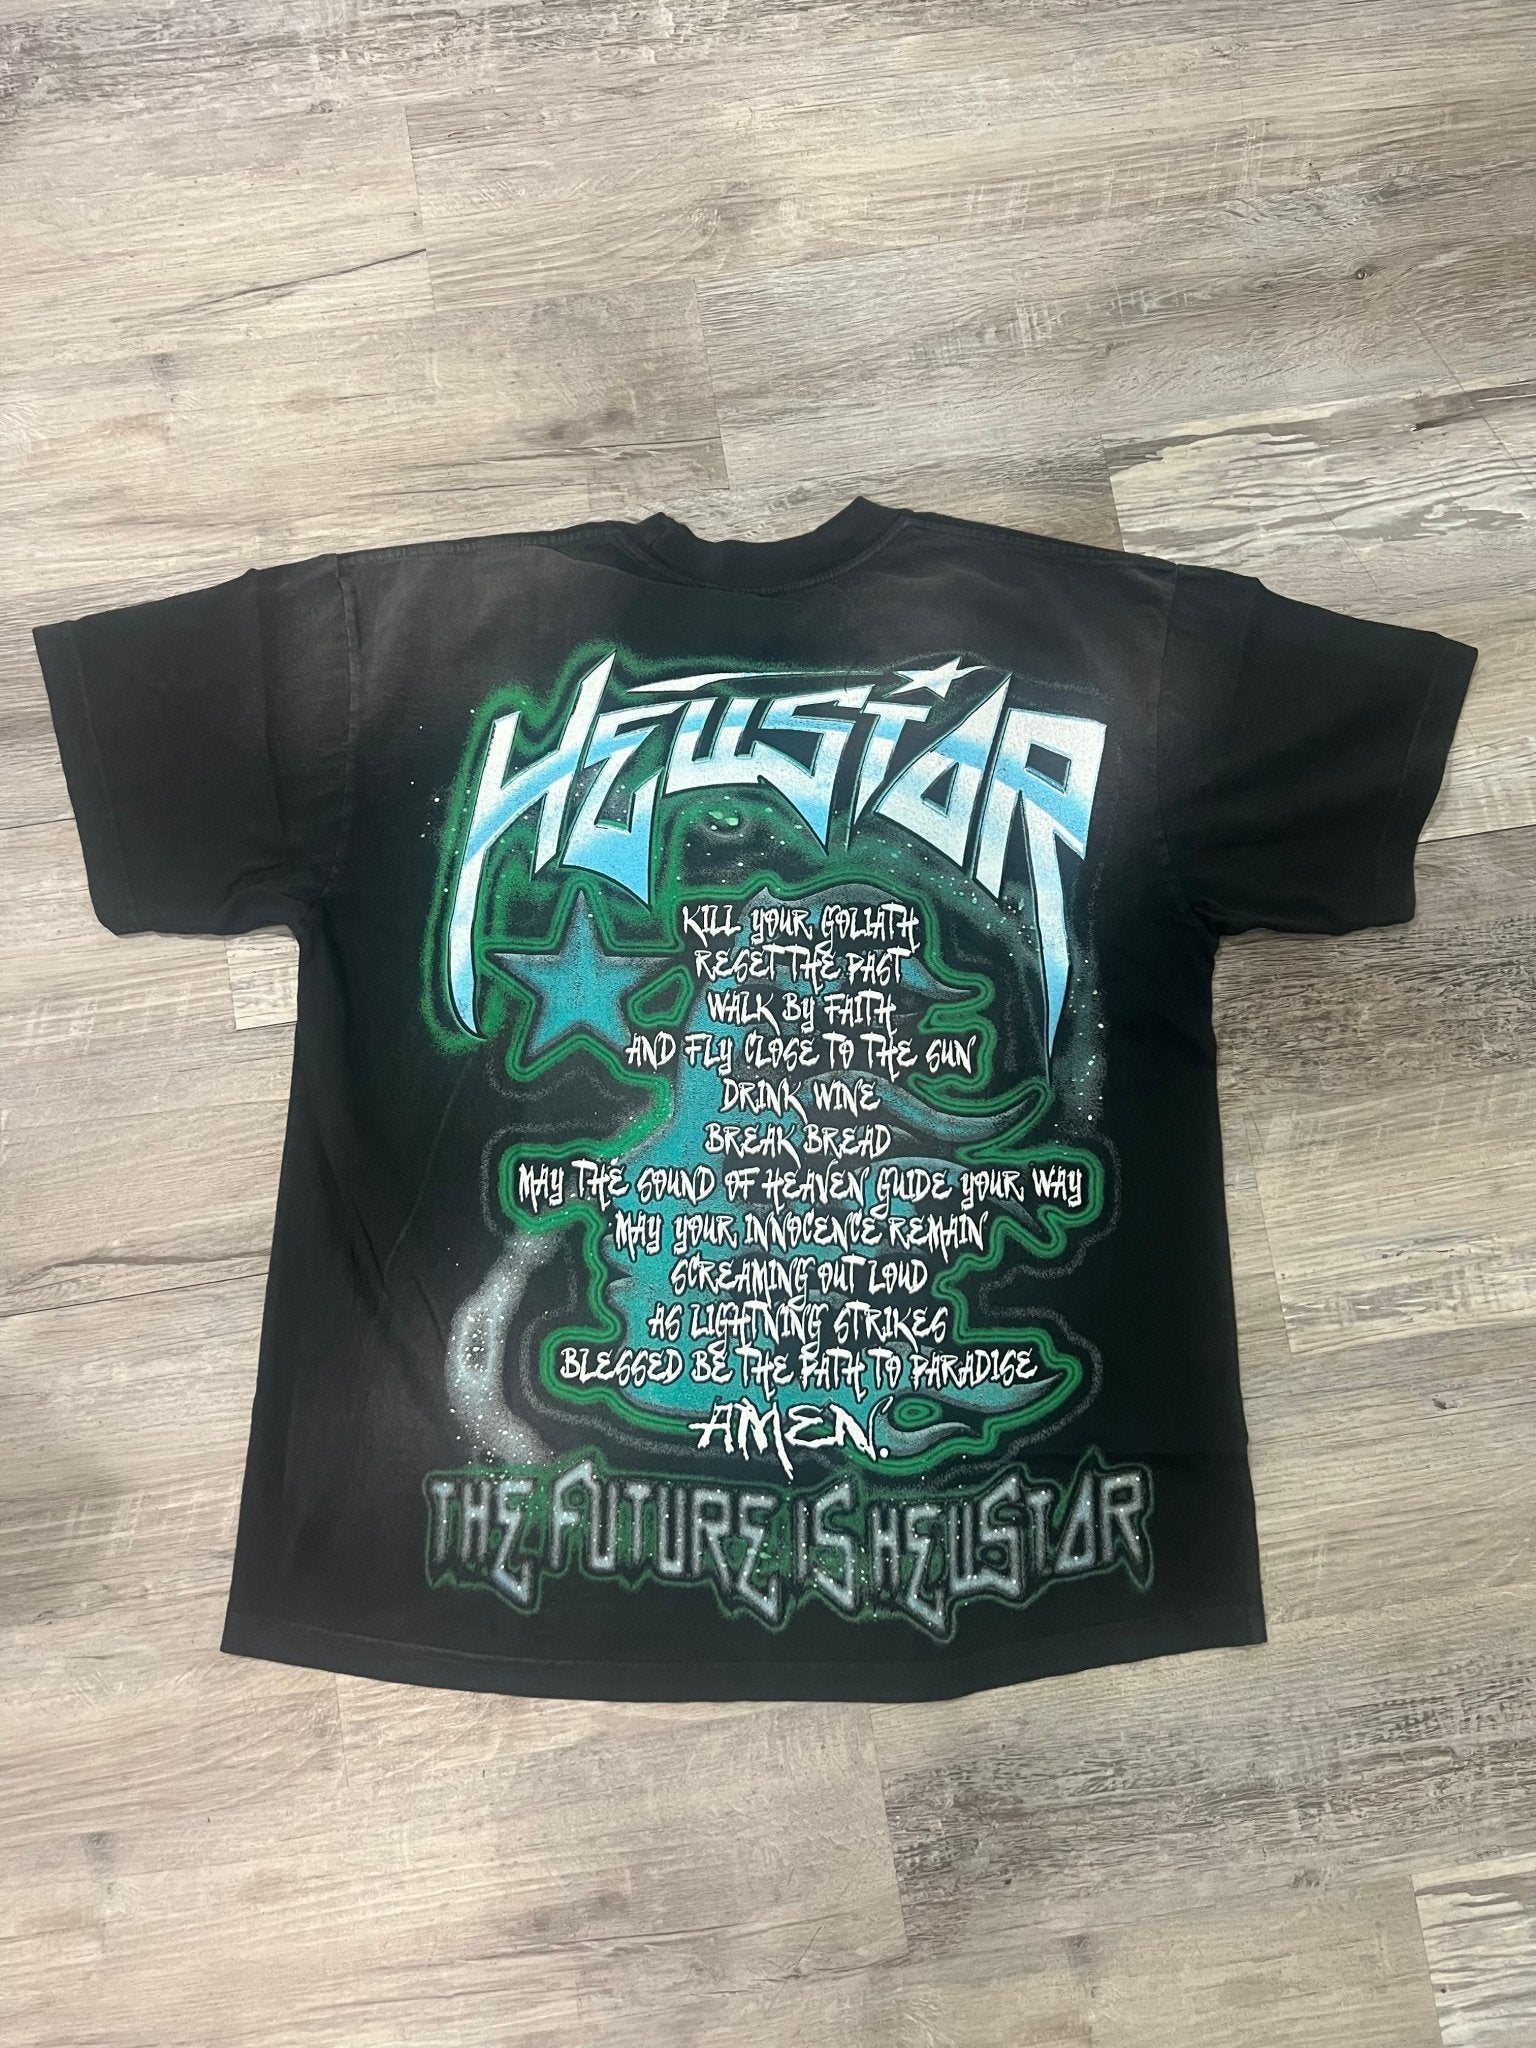 Hellstar The Future T-Shirt - Supra Sneakers